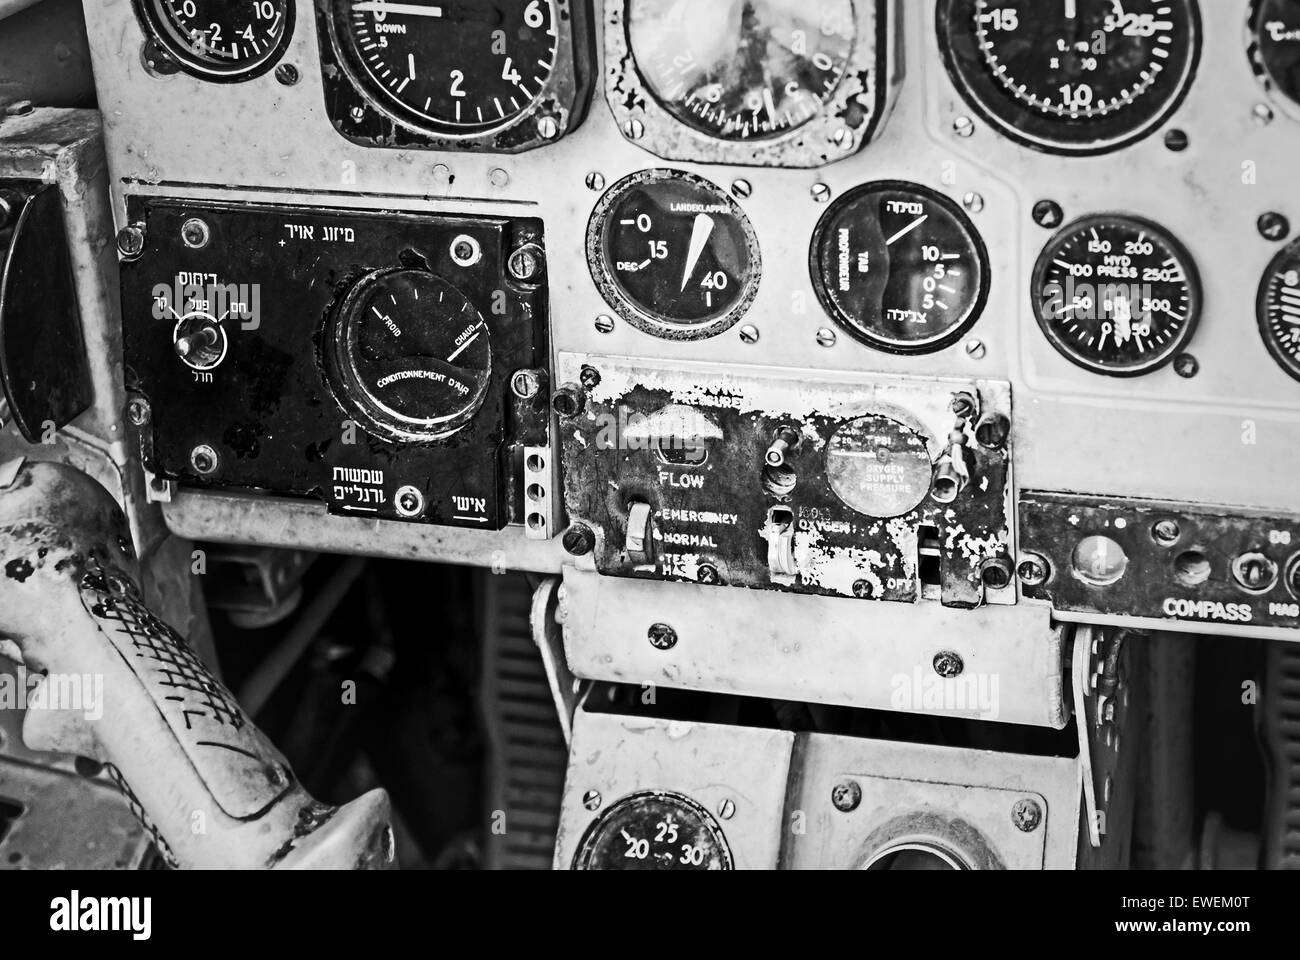 Altgerät auf dem pilot Cockpit schwarz / weiß-Foto Stockfoto